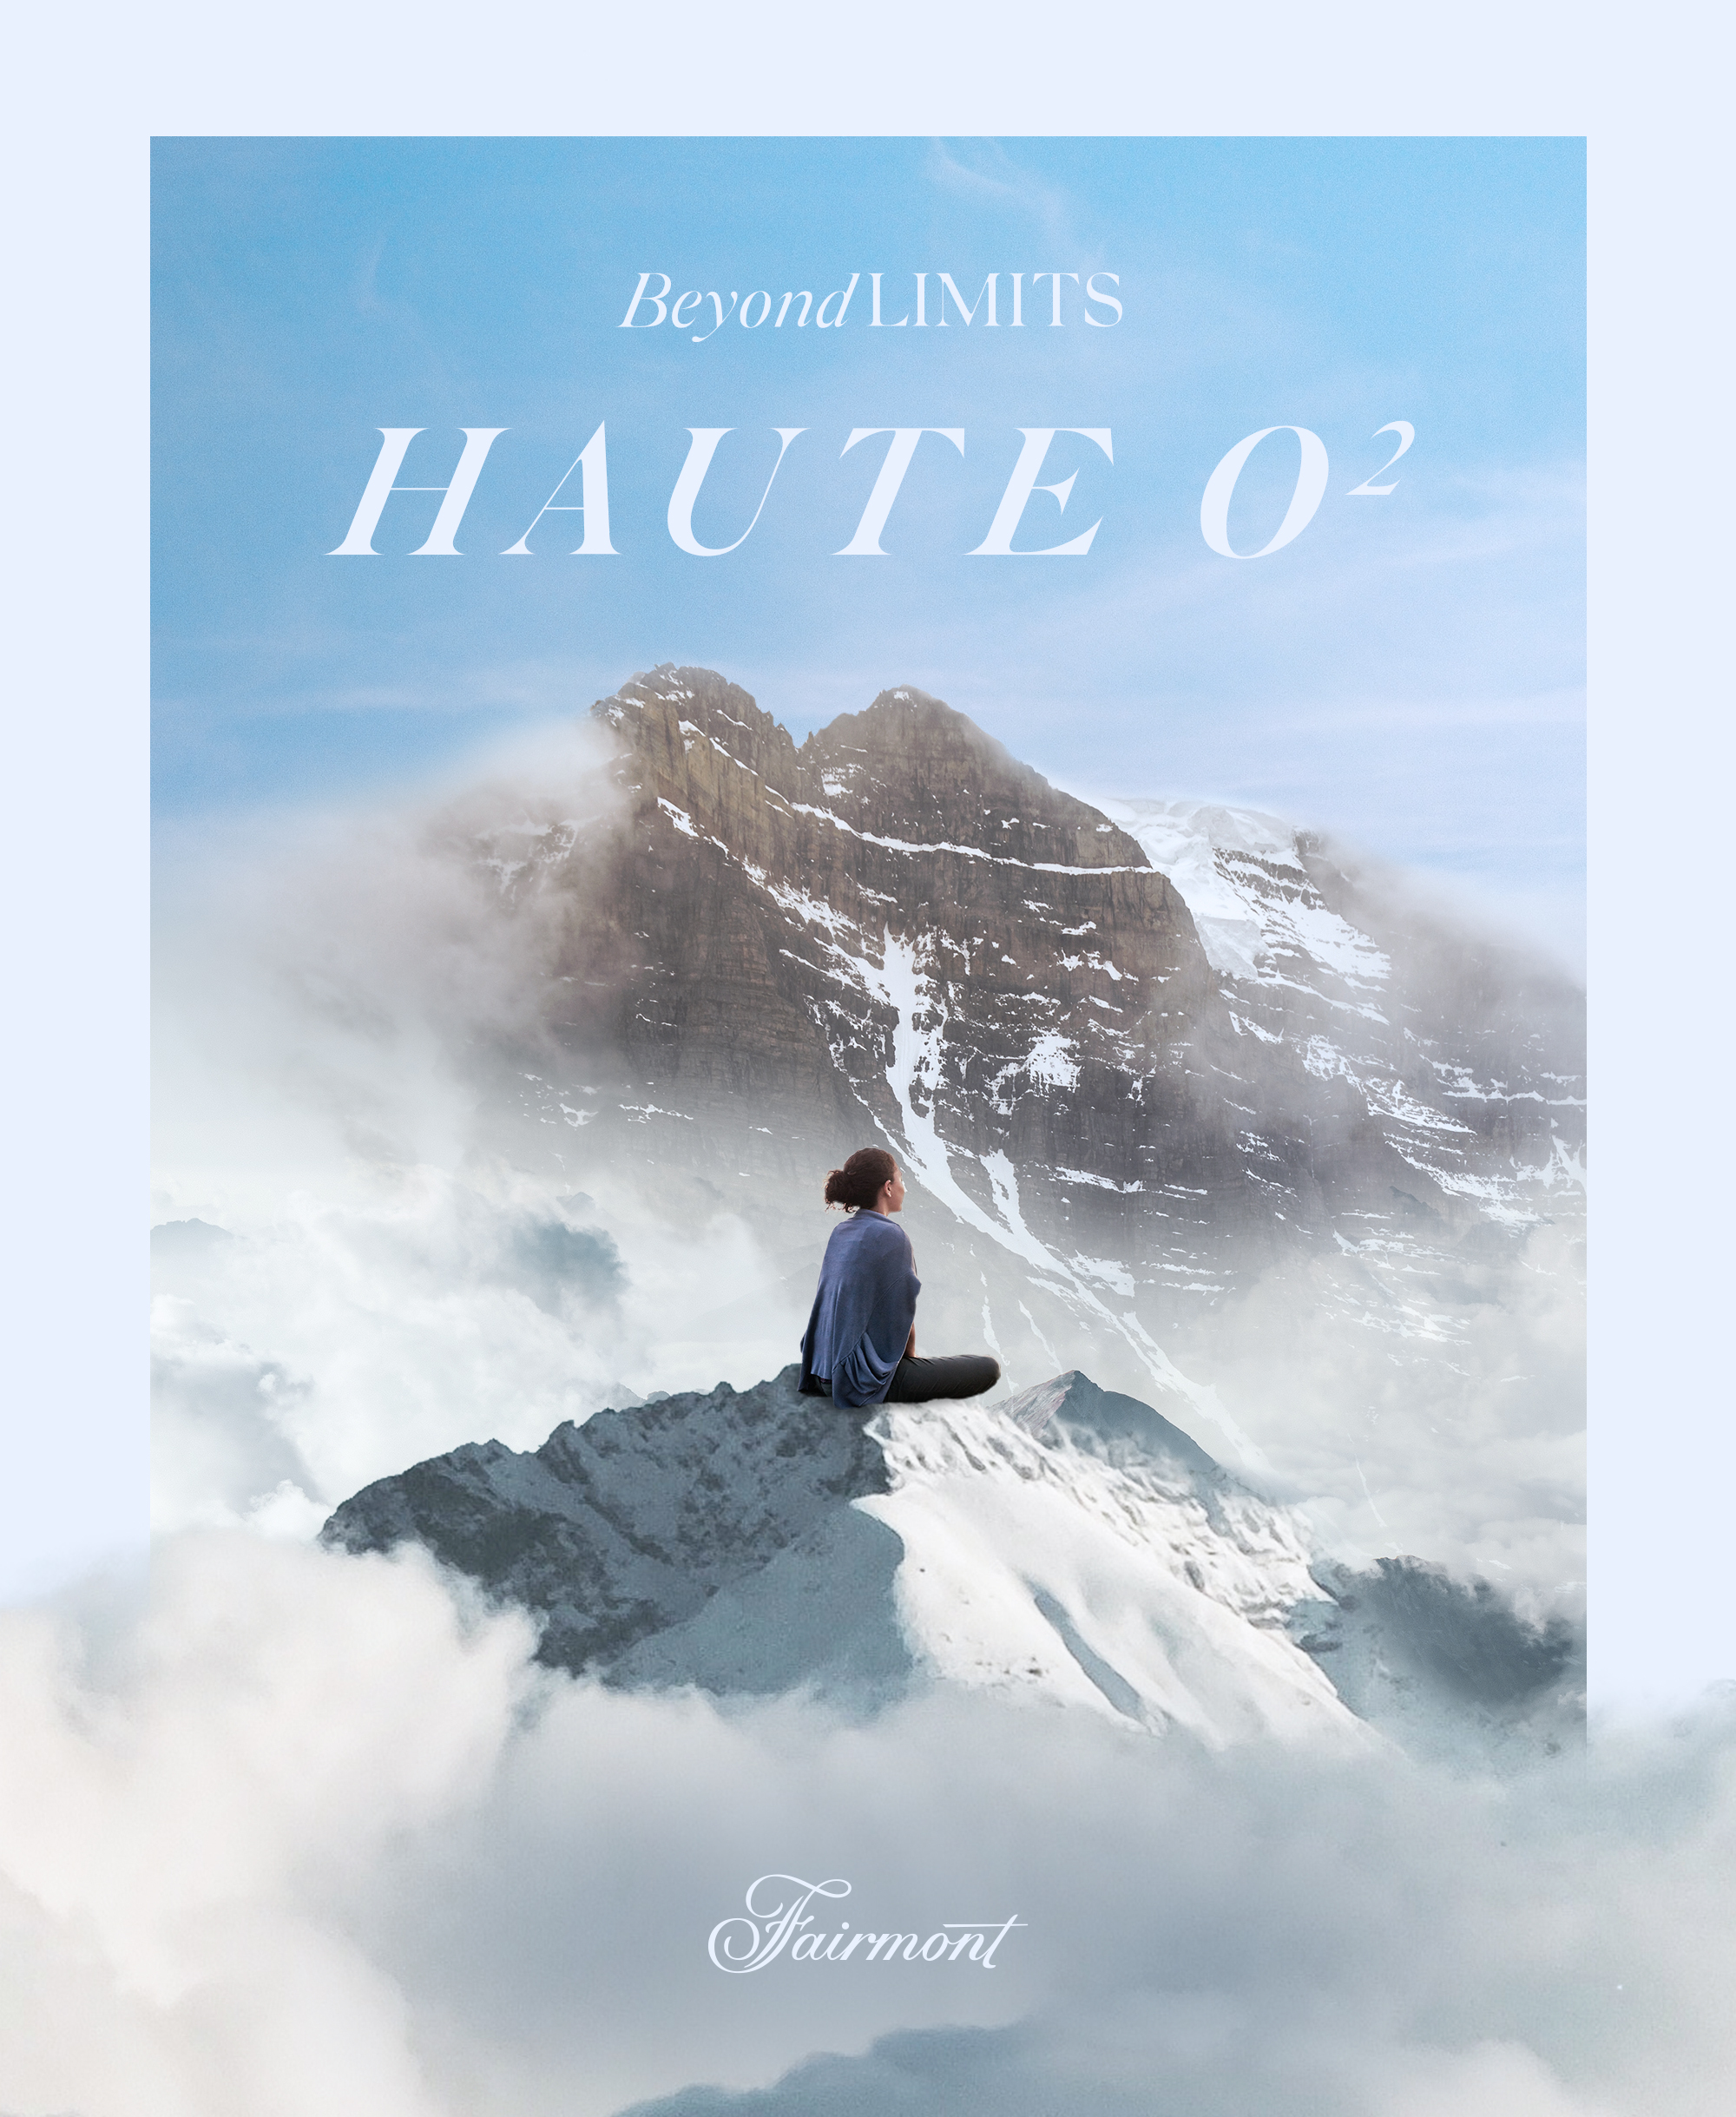 Fairmont Banff Springs debuts cliffside 'Haute 02' oxygen bar at 7000 ft.